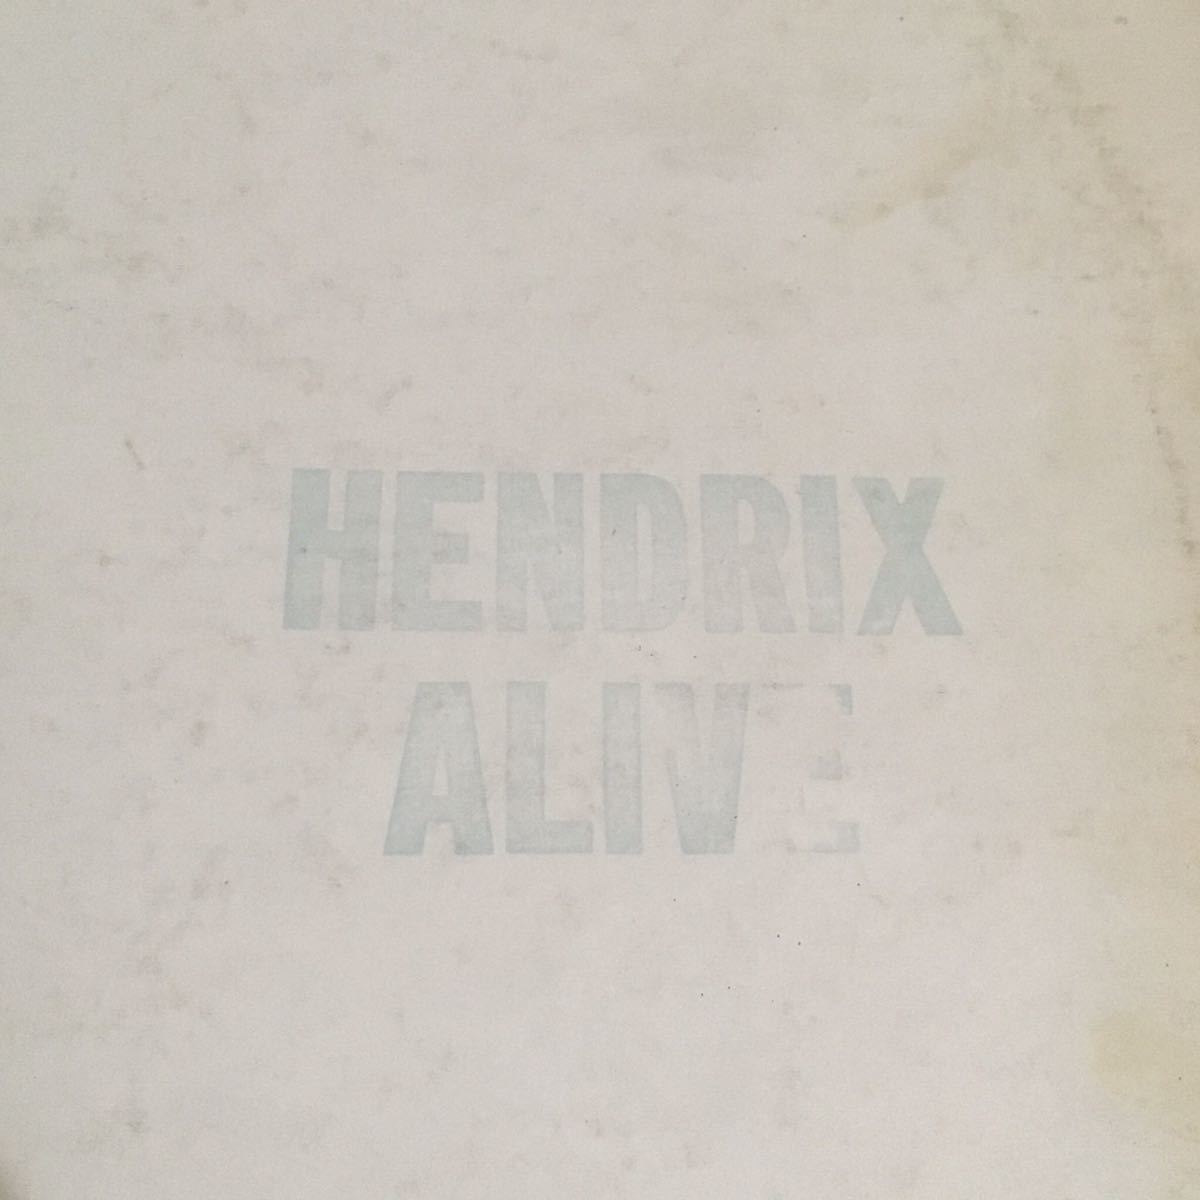 JIMI HENDRIX HENDRIX ジミ・ヘンドリックス ALIVE LP レコード 12インチ